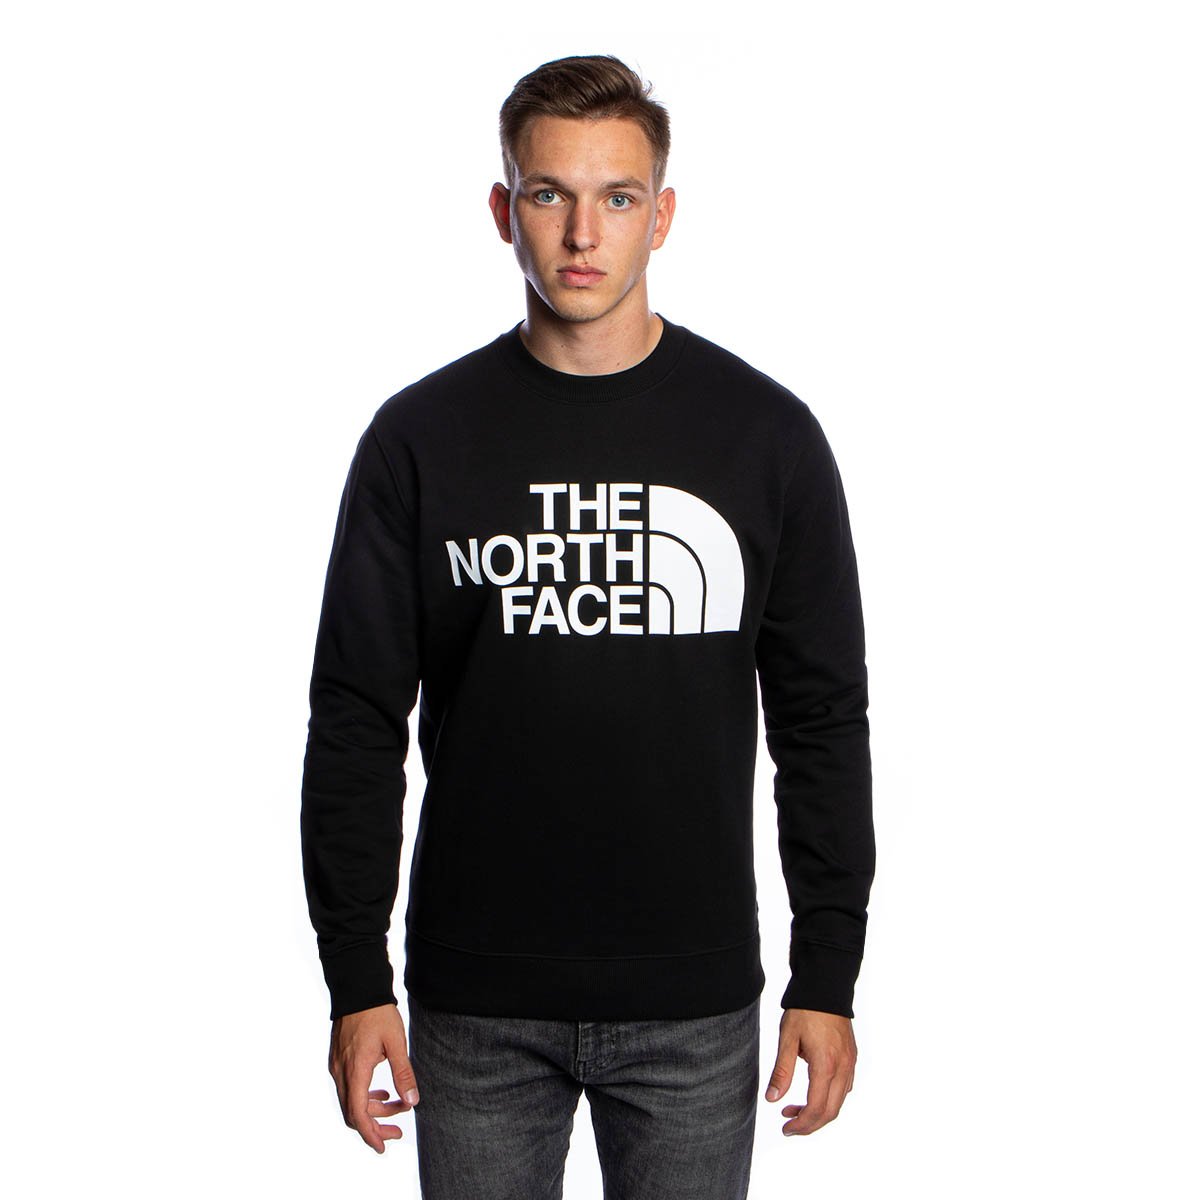 Sweatshirt The North Face Standard Crew black | Bludshop.com